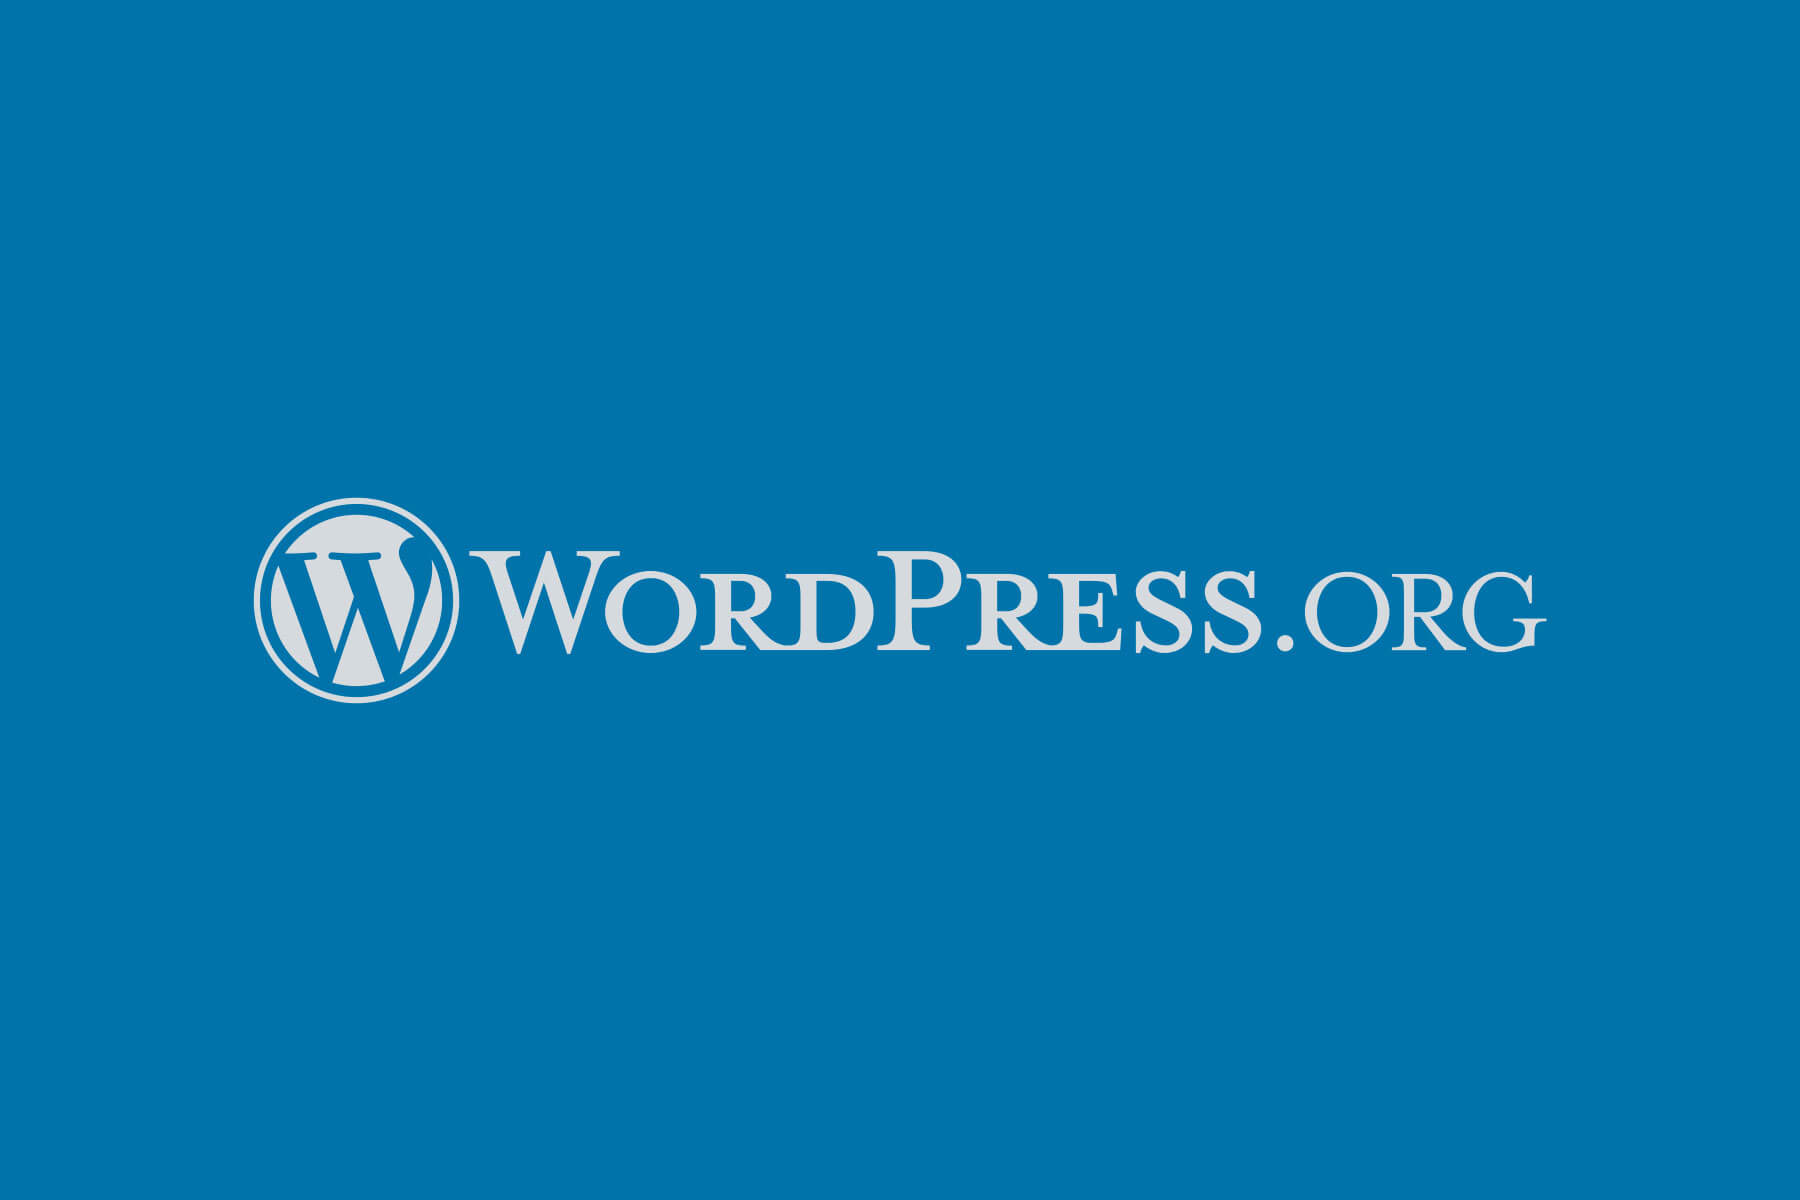 Wordpress your. WORDPRESS. WORDPRESS картинки. WORDPRESS логотип. Cms WORDPRESS.